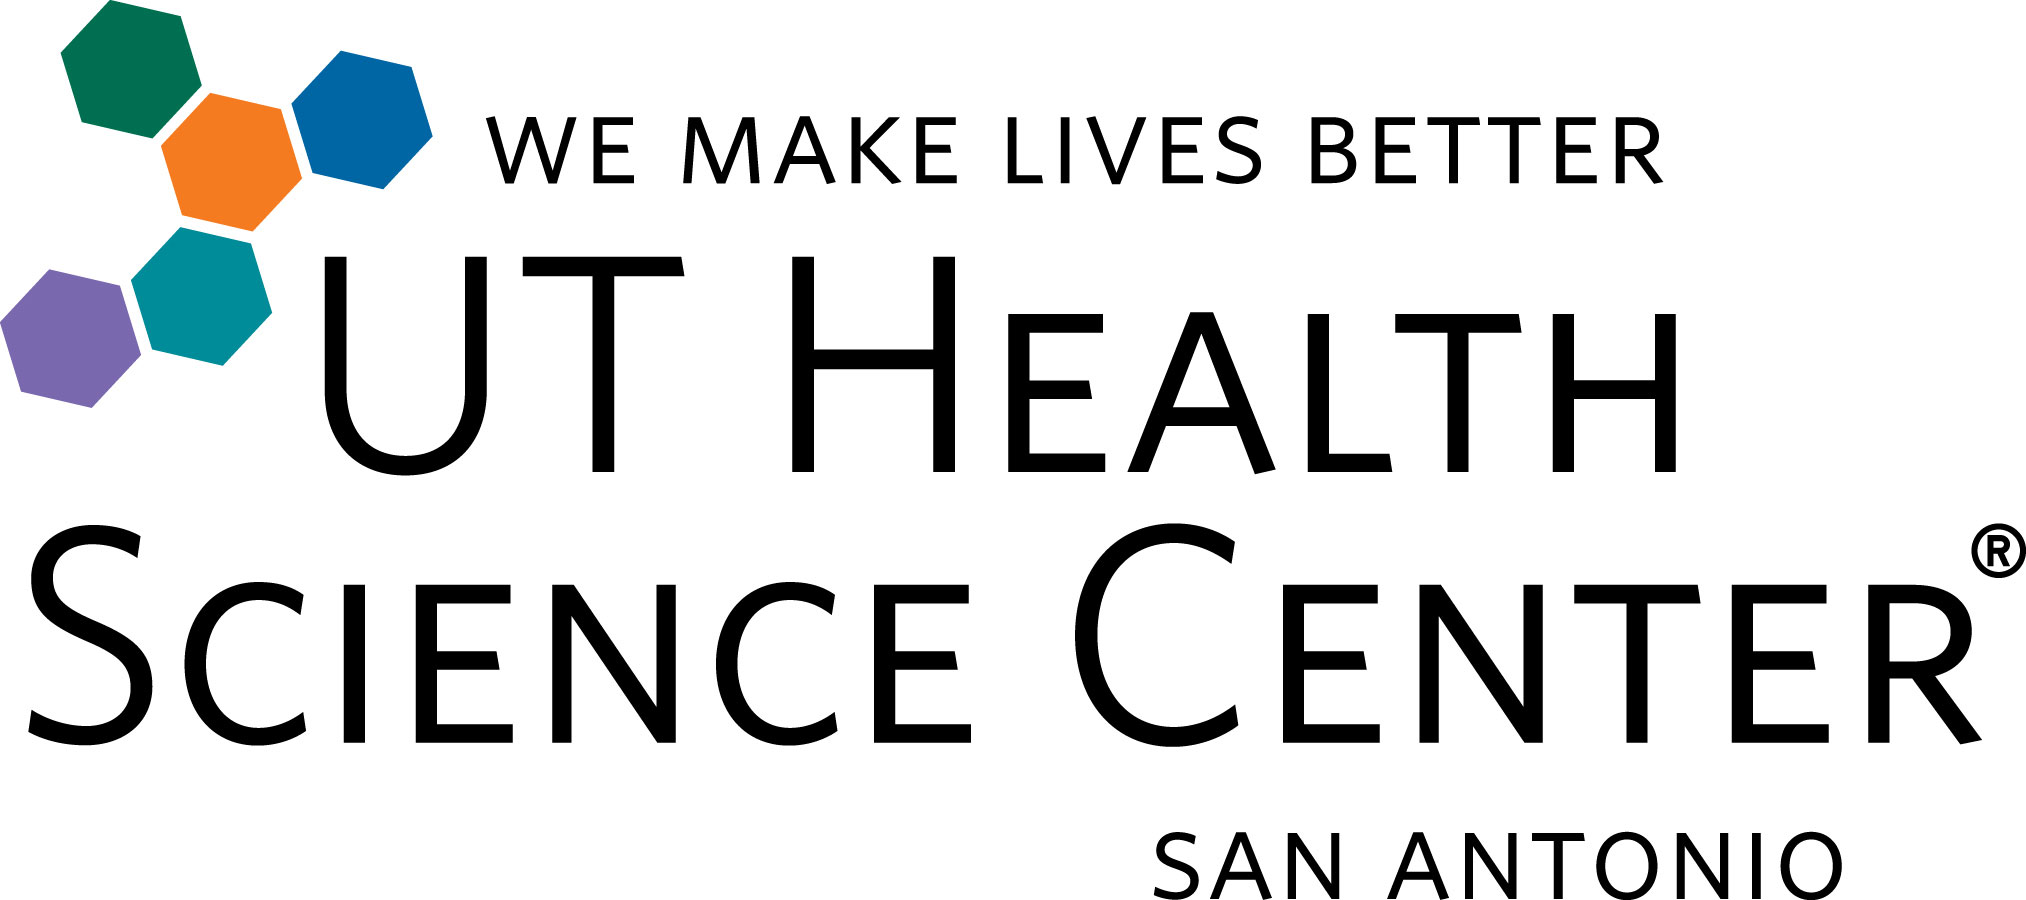 University of Texas Health Science Center at San Antonio